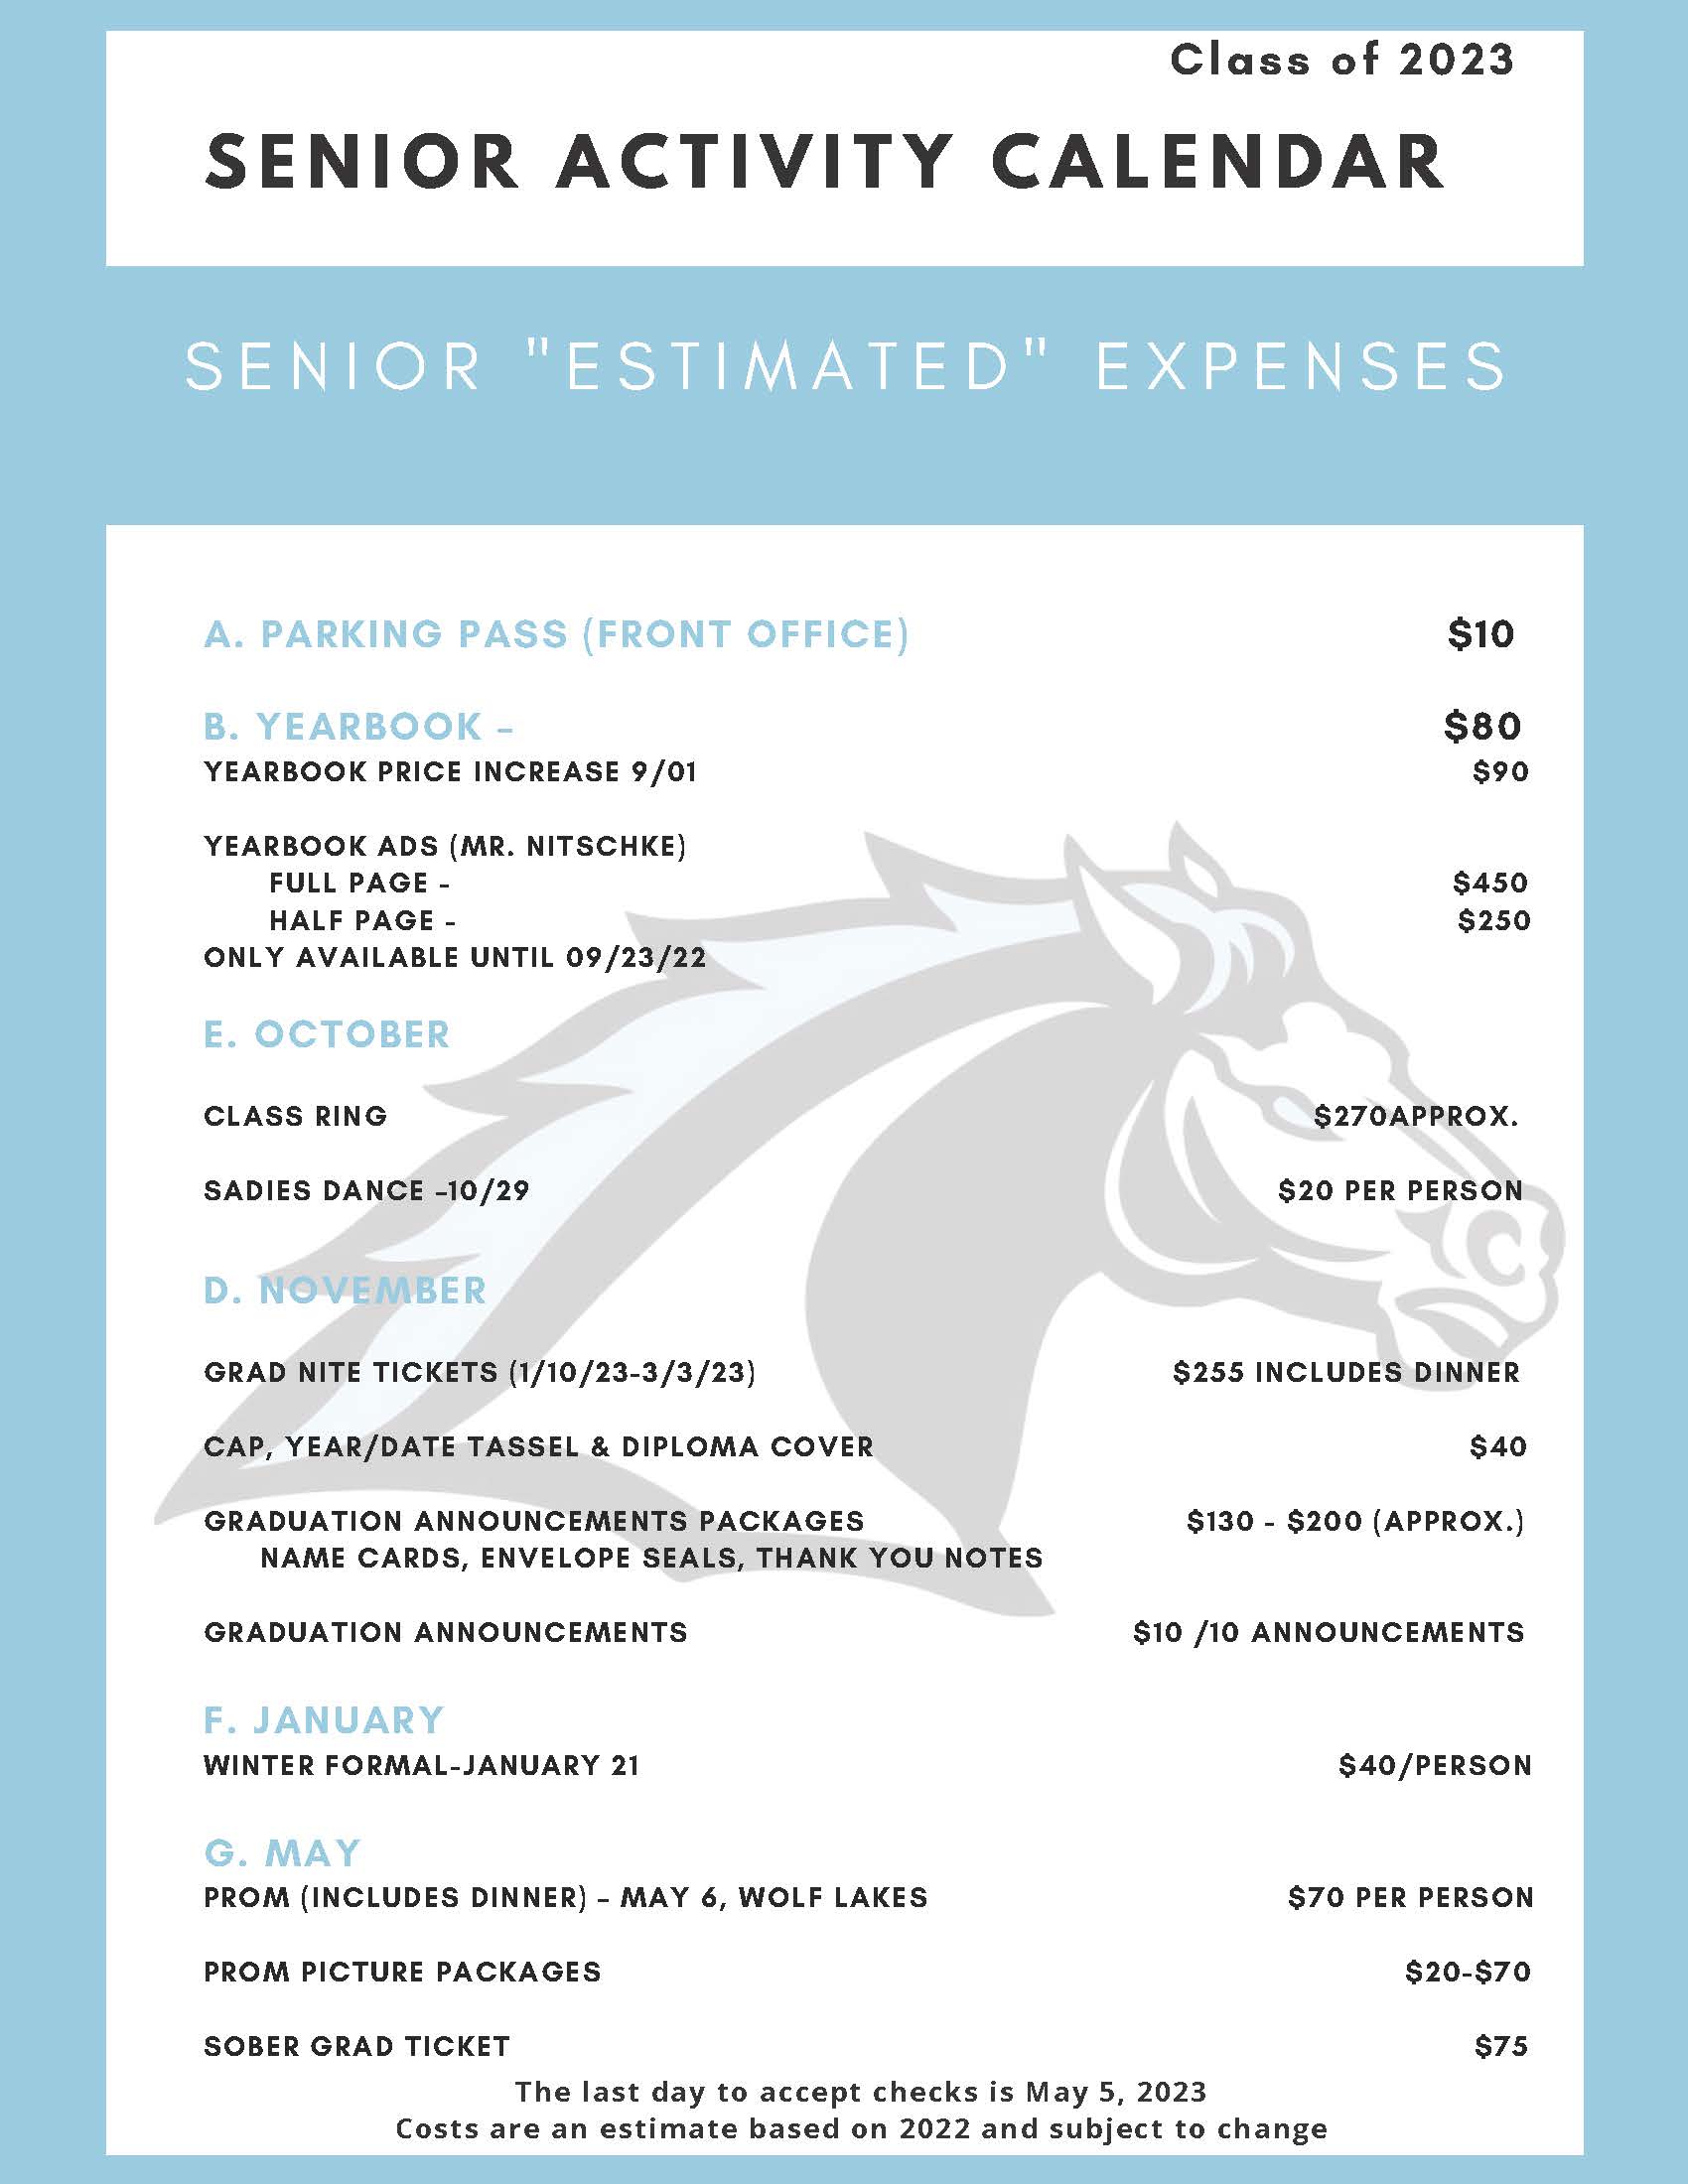 Senior Activity Calendar and Expenses